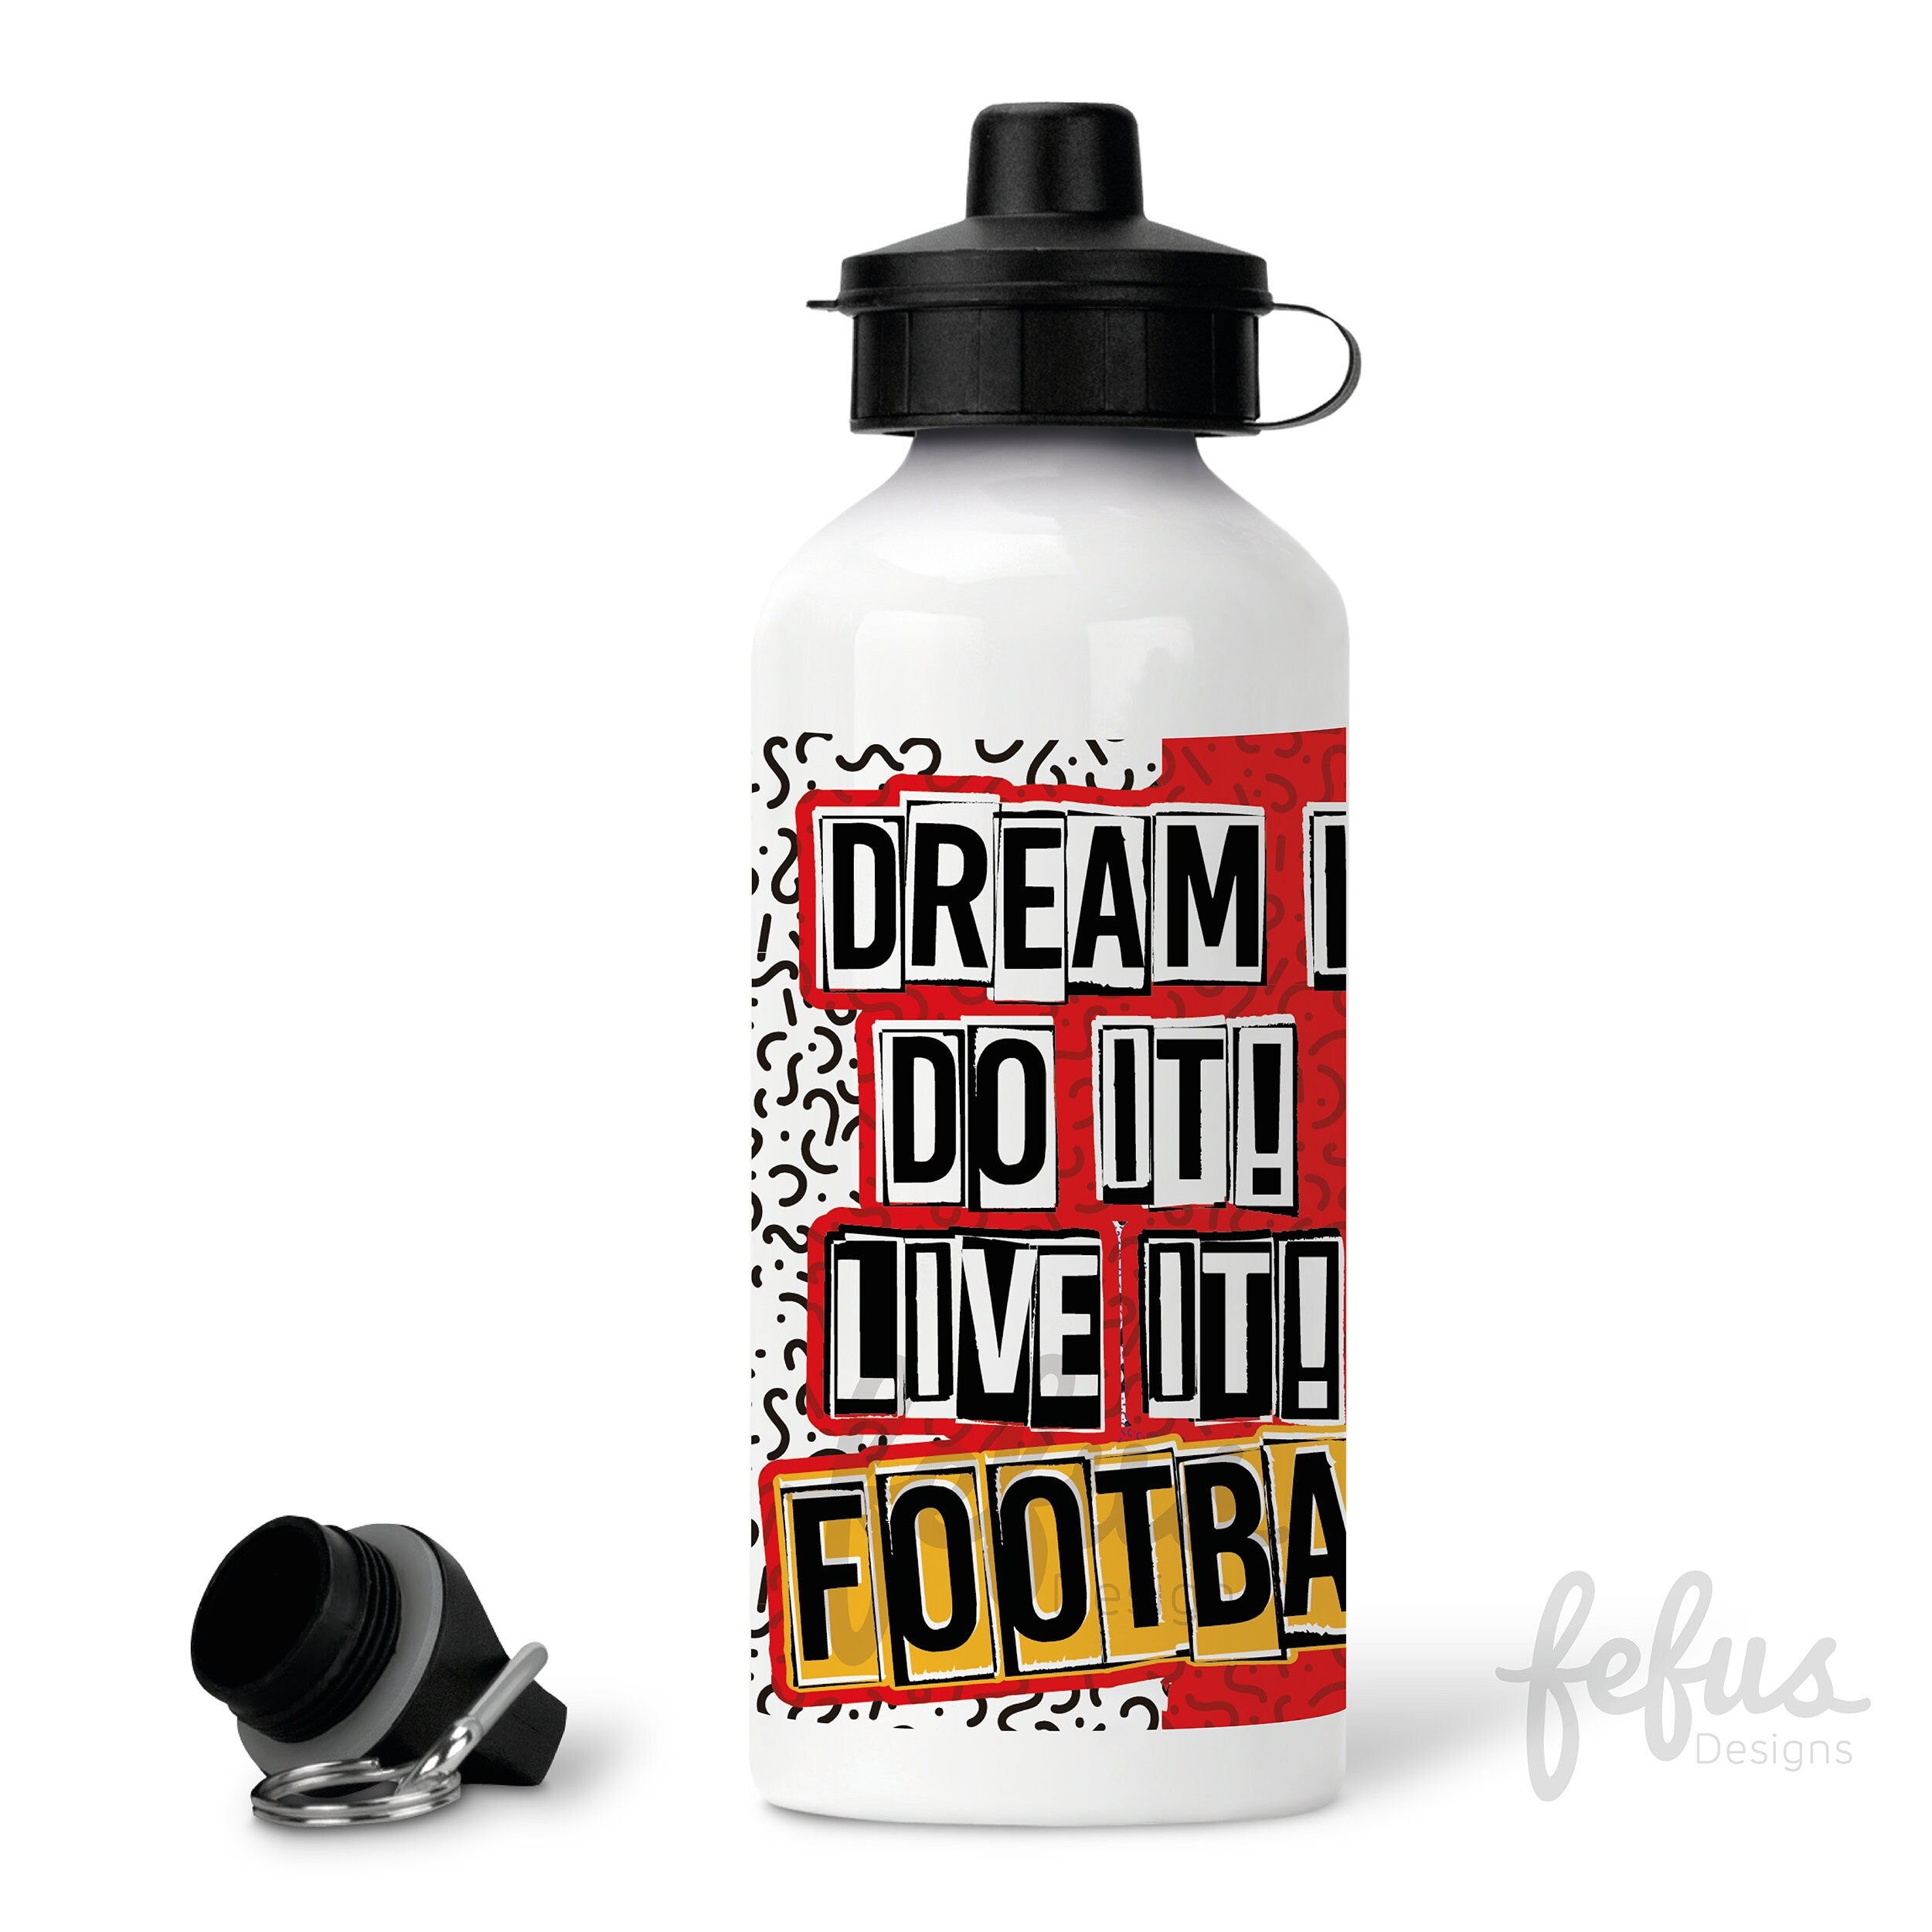 Boys Footballer Aluminium Water Bottle | Gifts for Mixed Race Boys | Back to school drinks bottle | Sports bottle | Birthday | Christmas